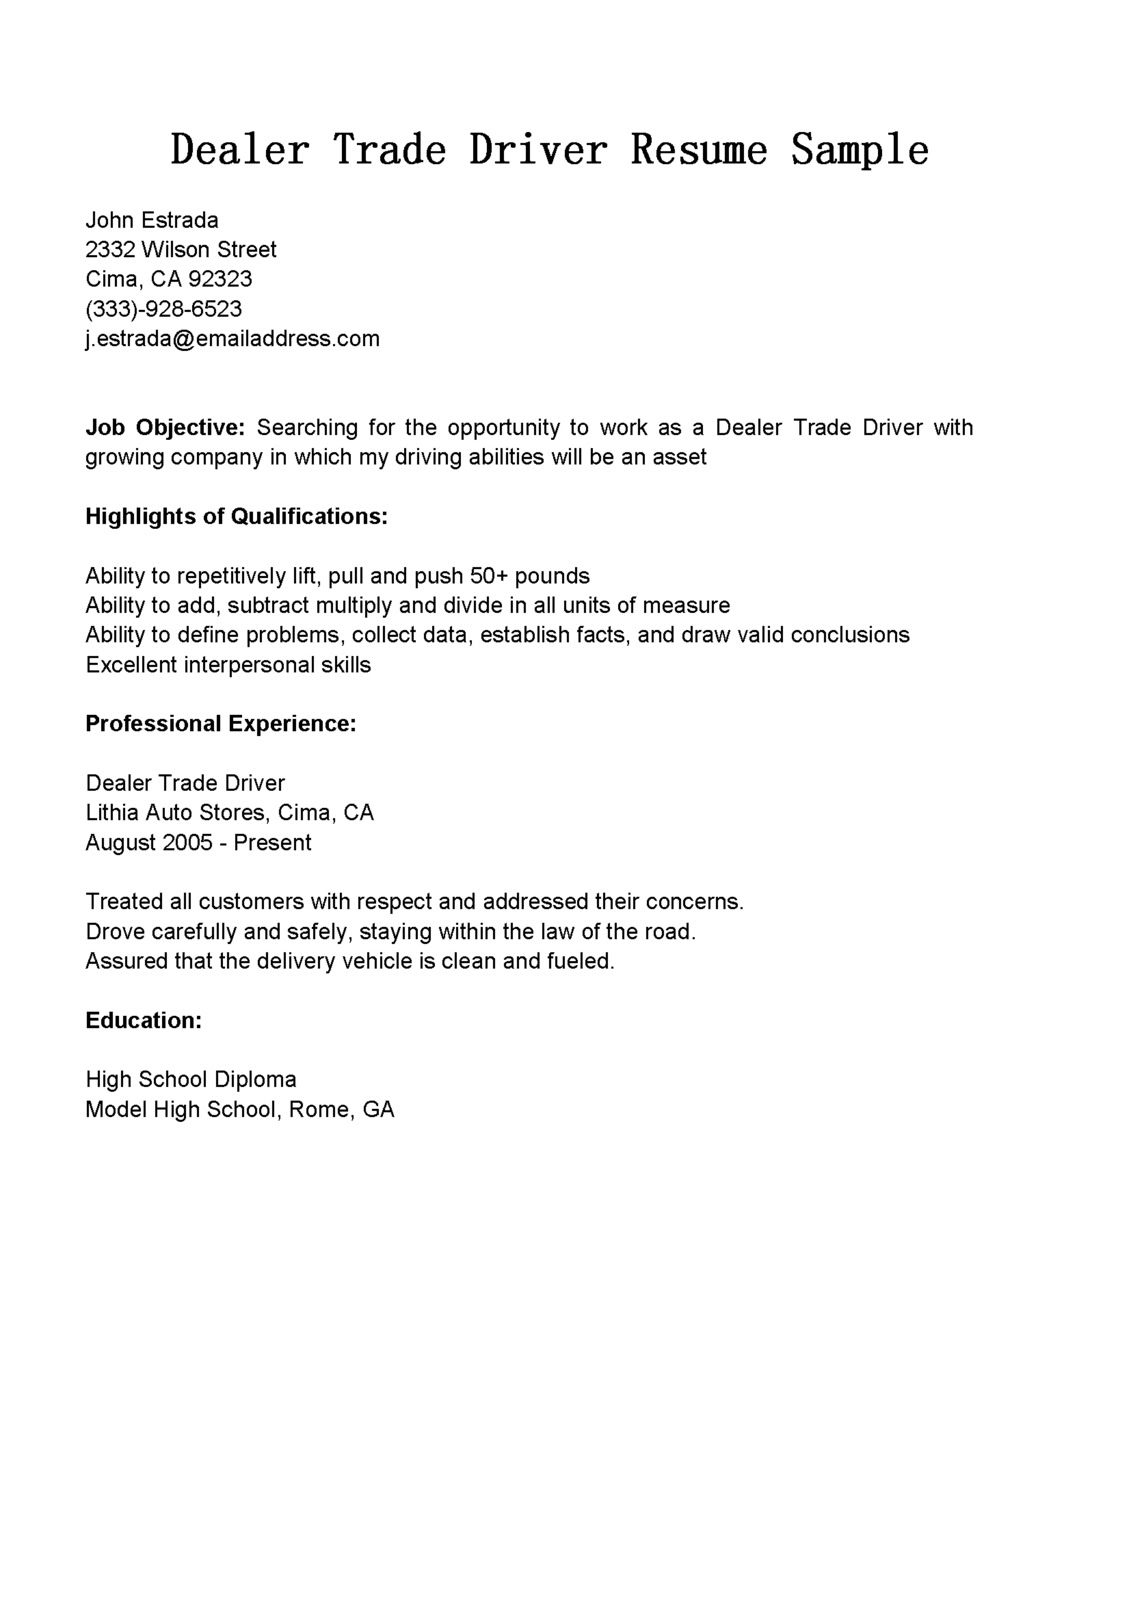 Fedex driver resume